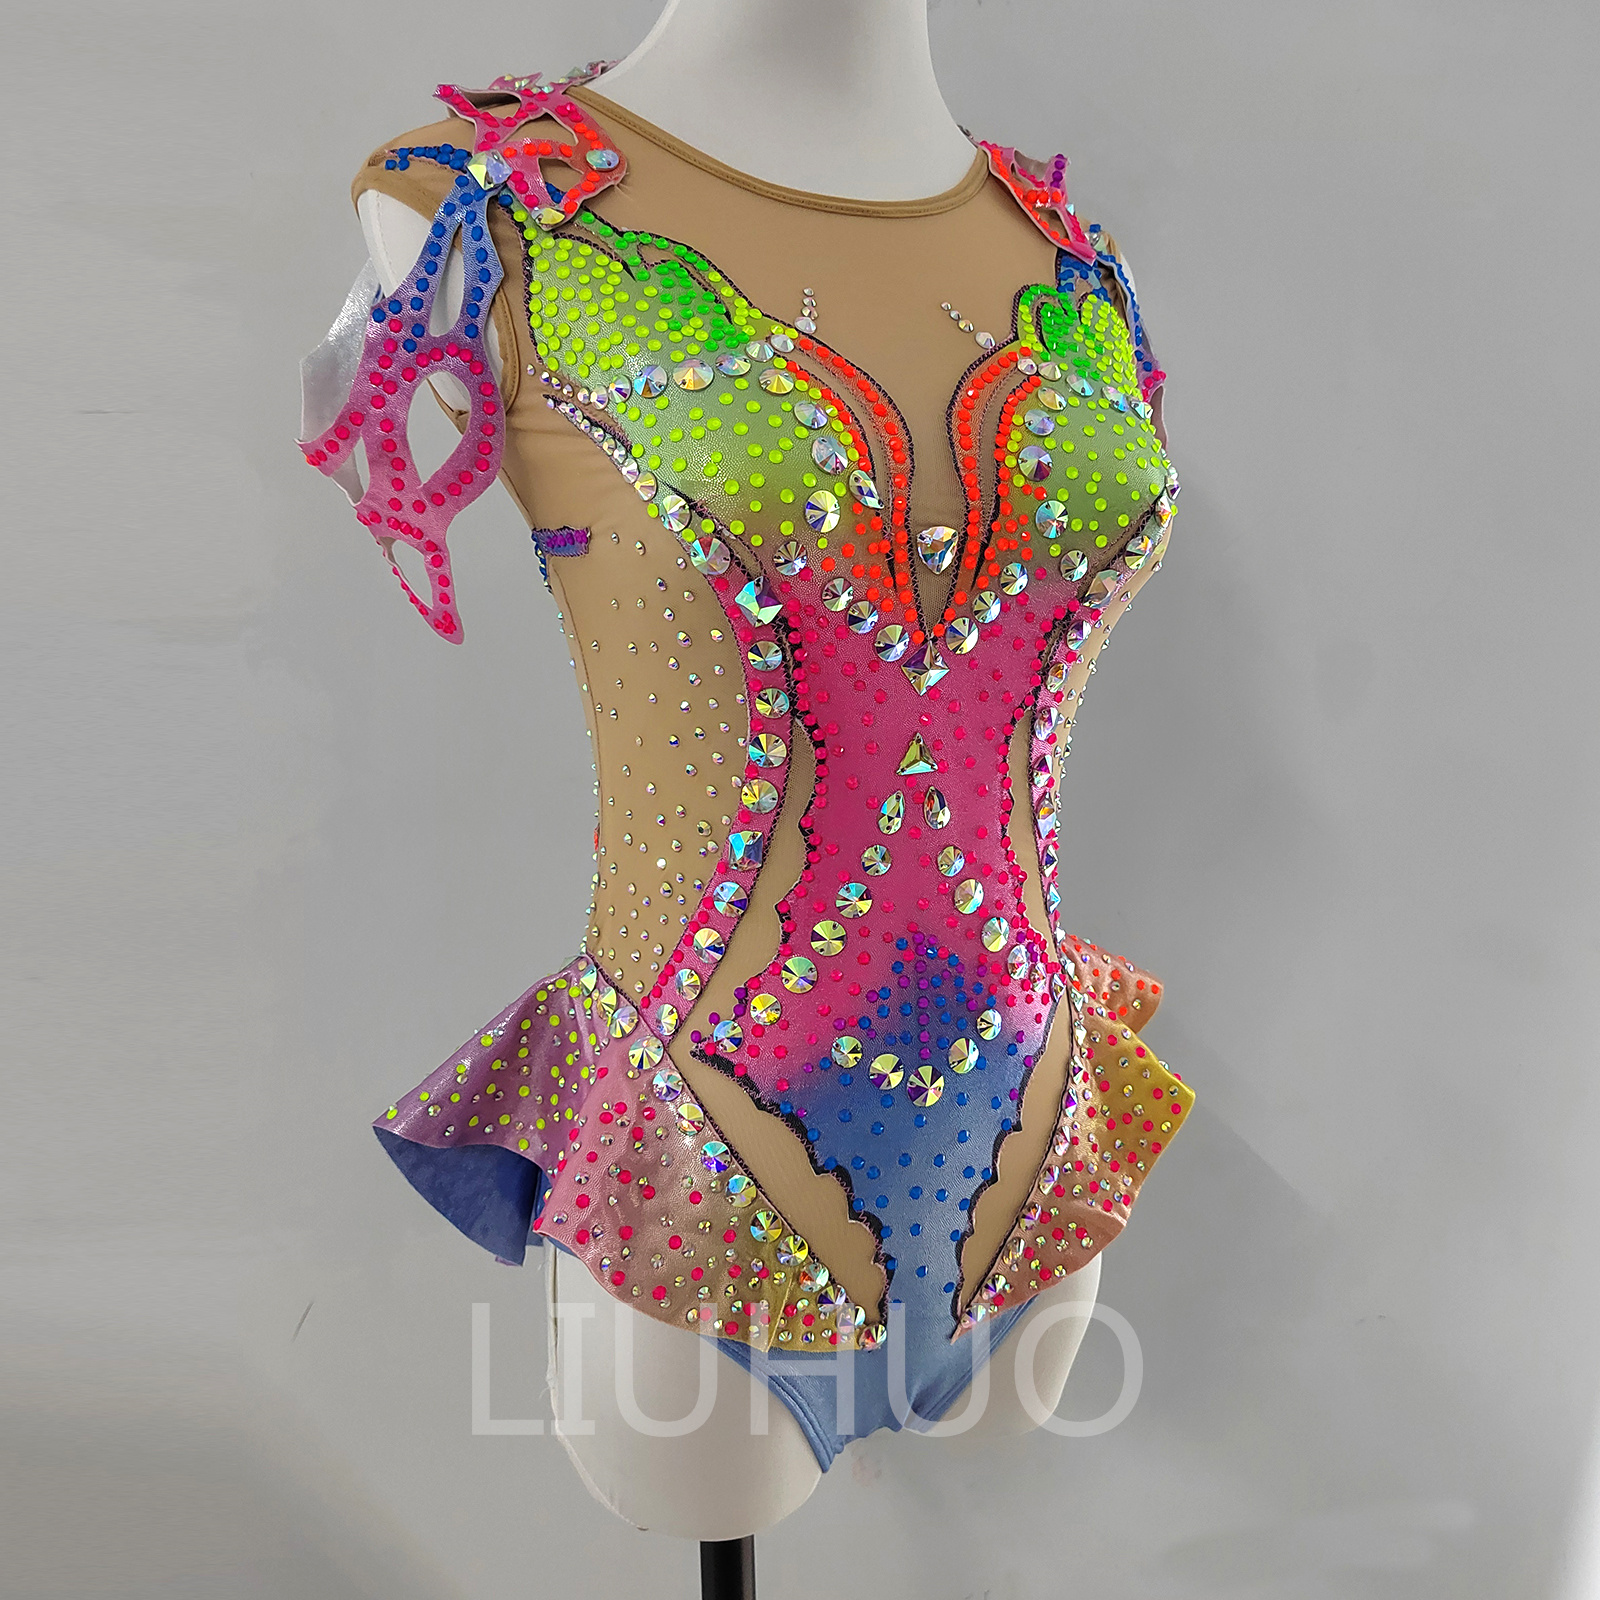 LIUHUO Rhythmic Gymnastics Leotards Artistics Professional Customize Colors Girls Multicolour